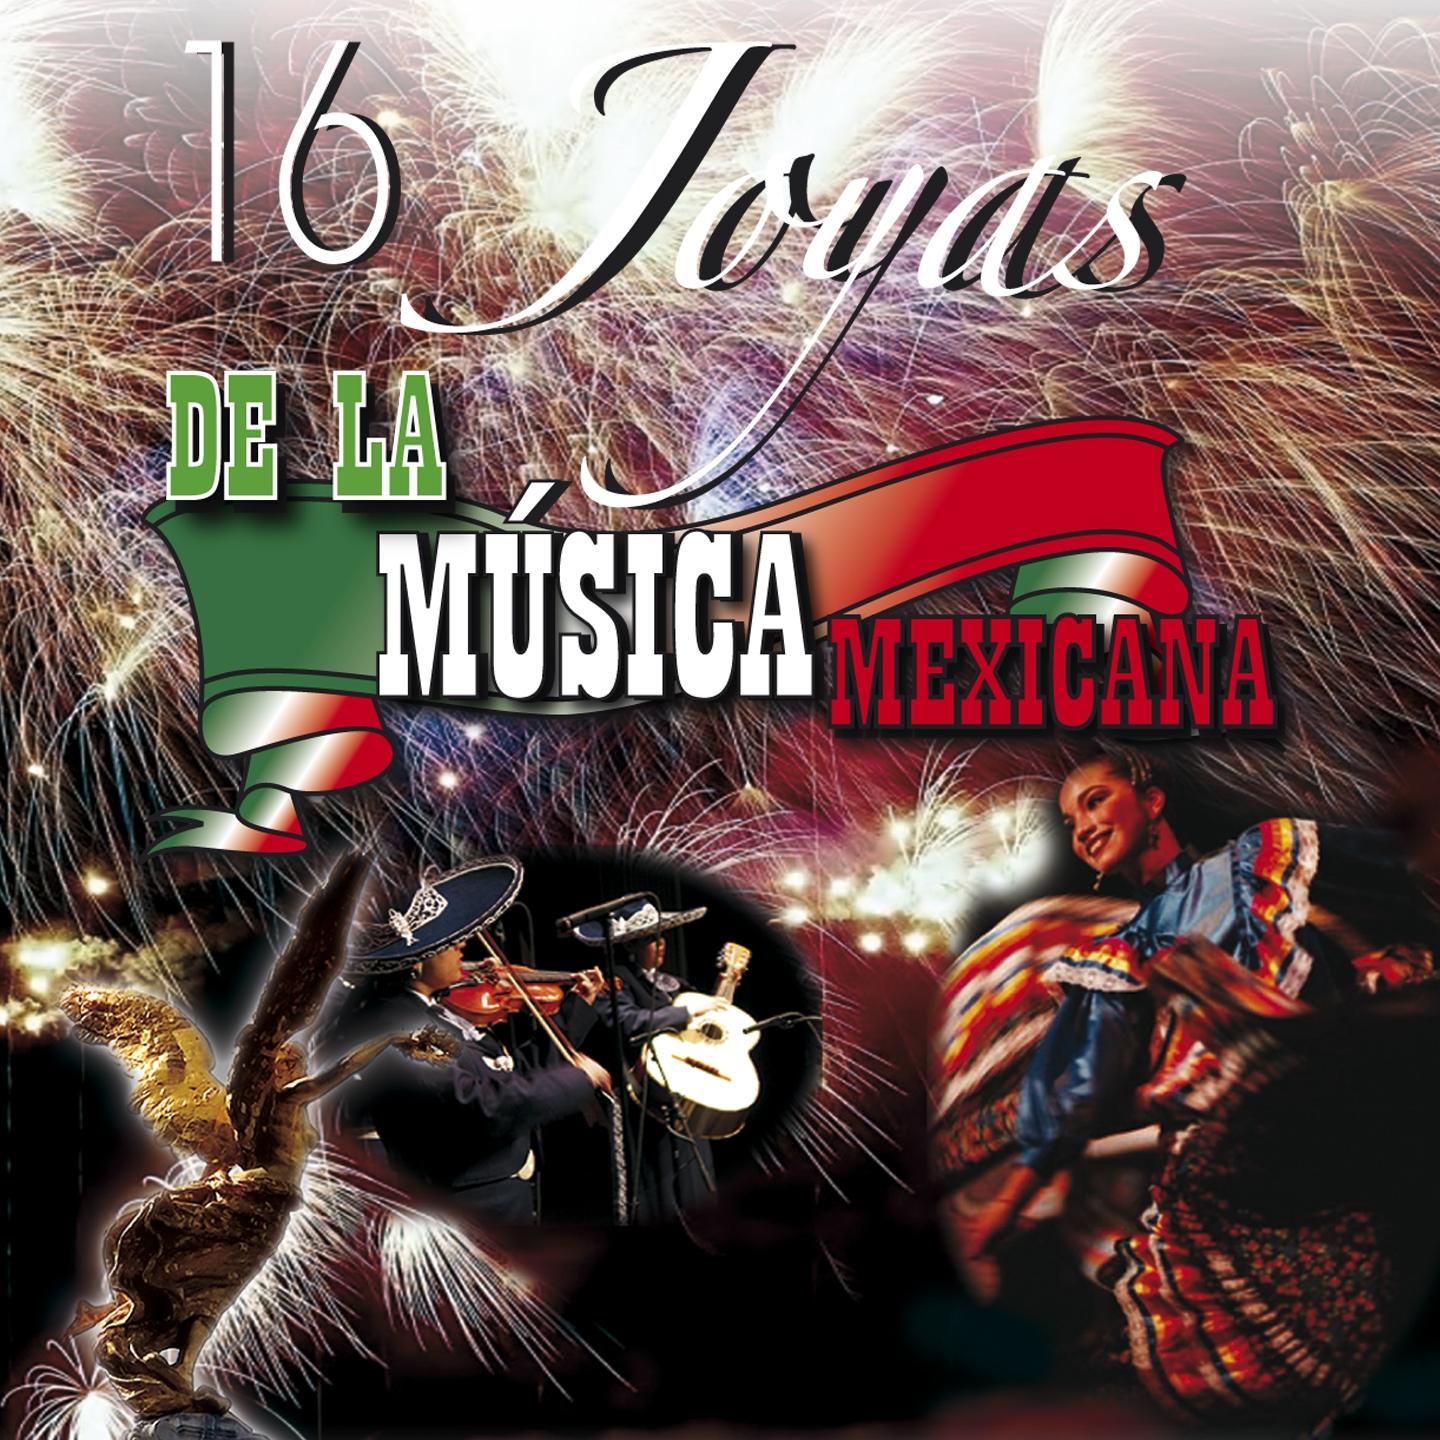 16 Joyas de la Mu sica Mexicana